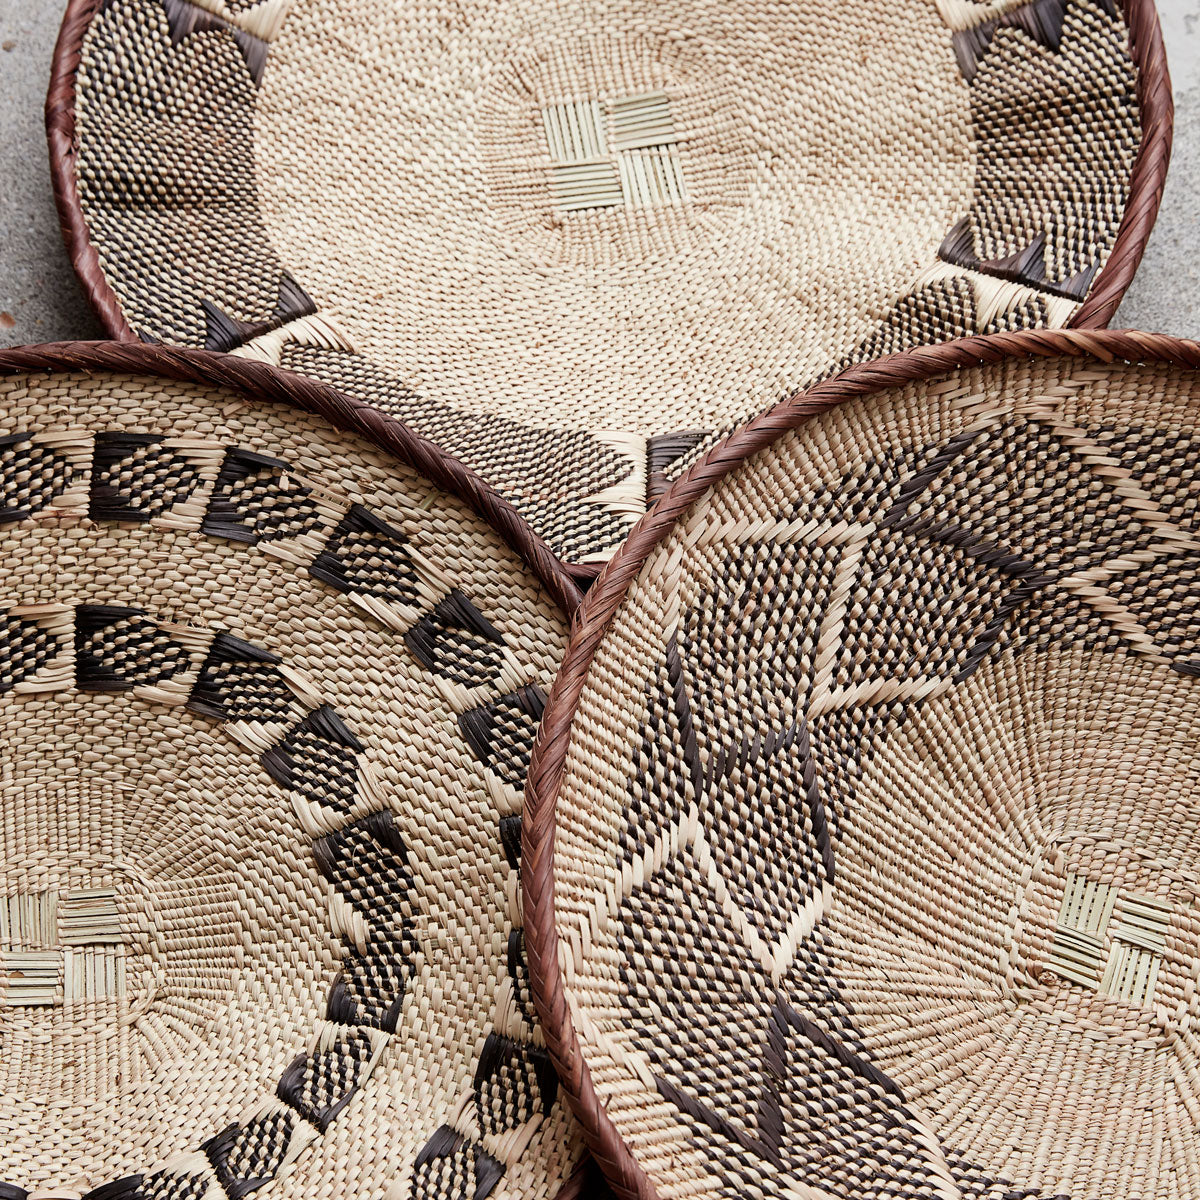 Baskets, Tonga 38cm